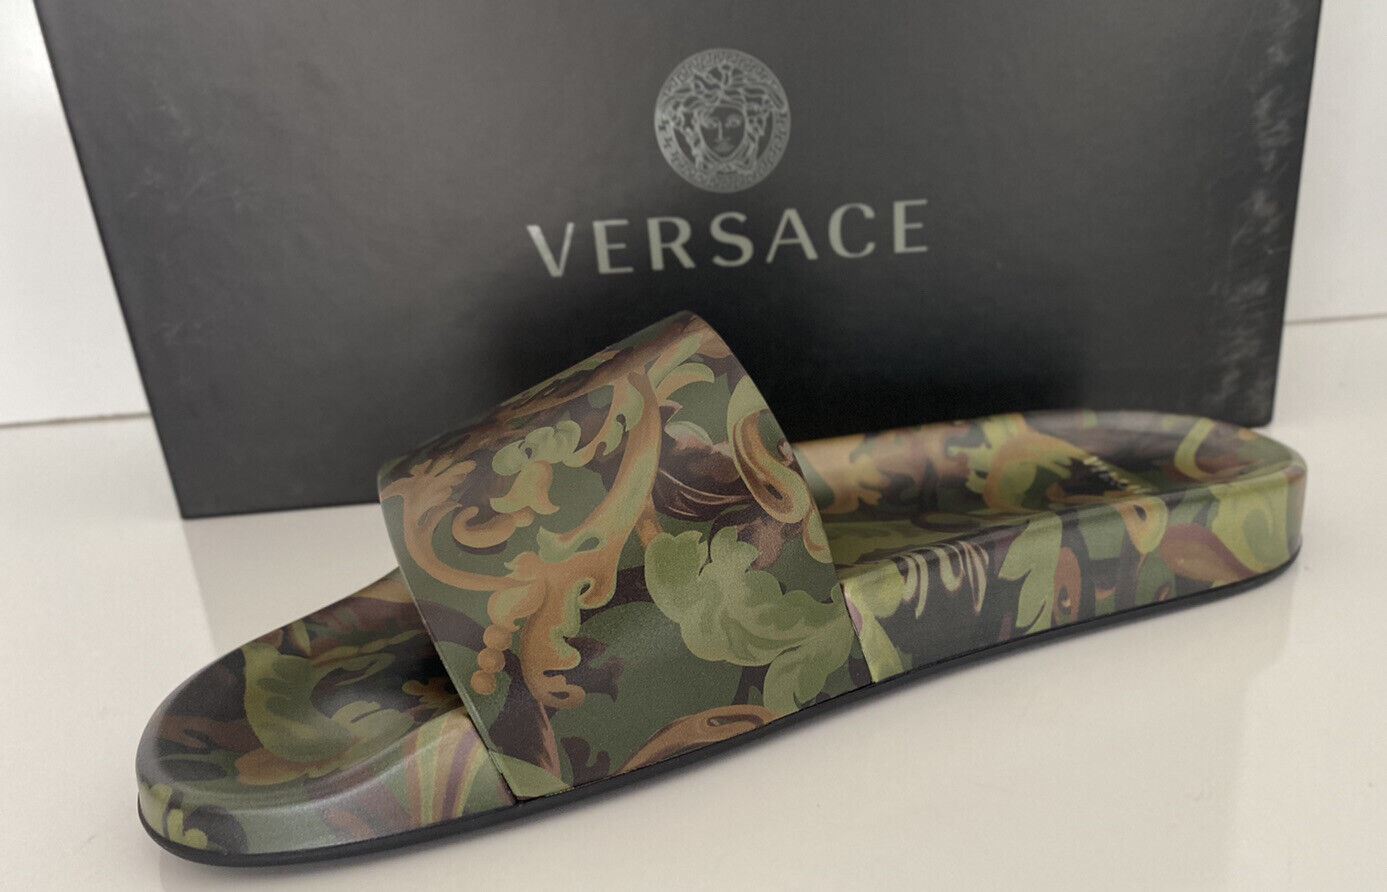 Сандалии-шлепанцы Versace Baroccoflage, цвет хаки 9, США, 395 долларов США (42 евро), IT DSU6516 